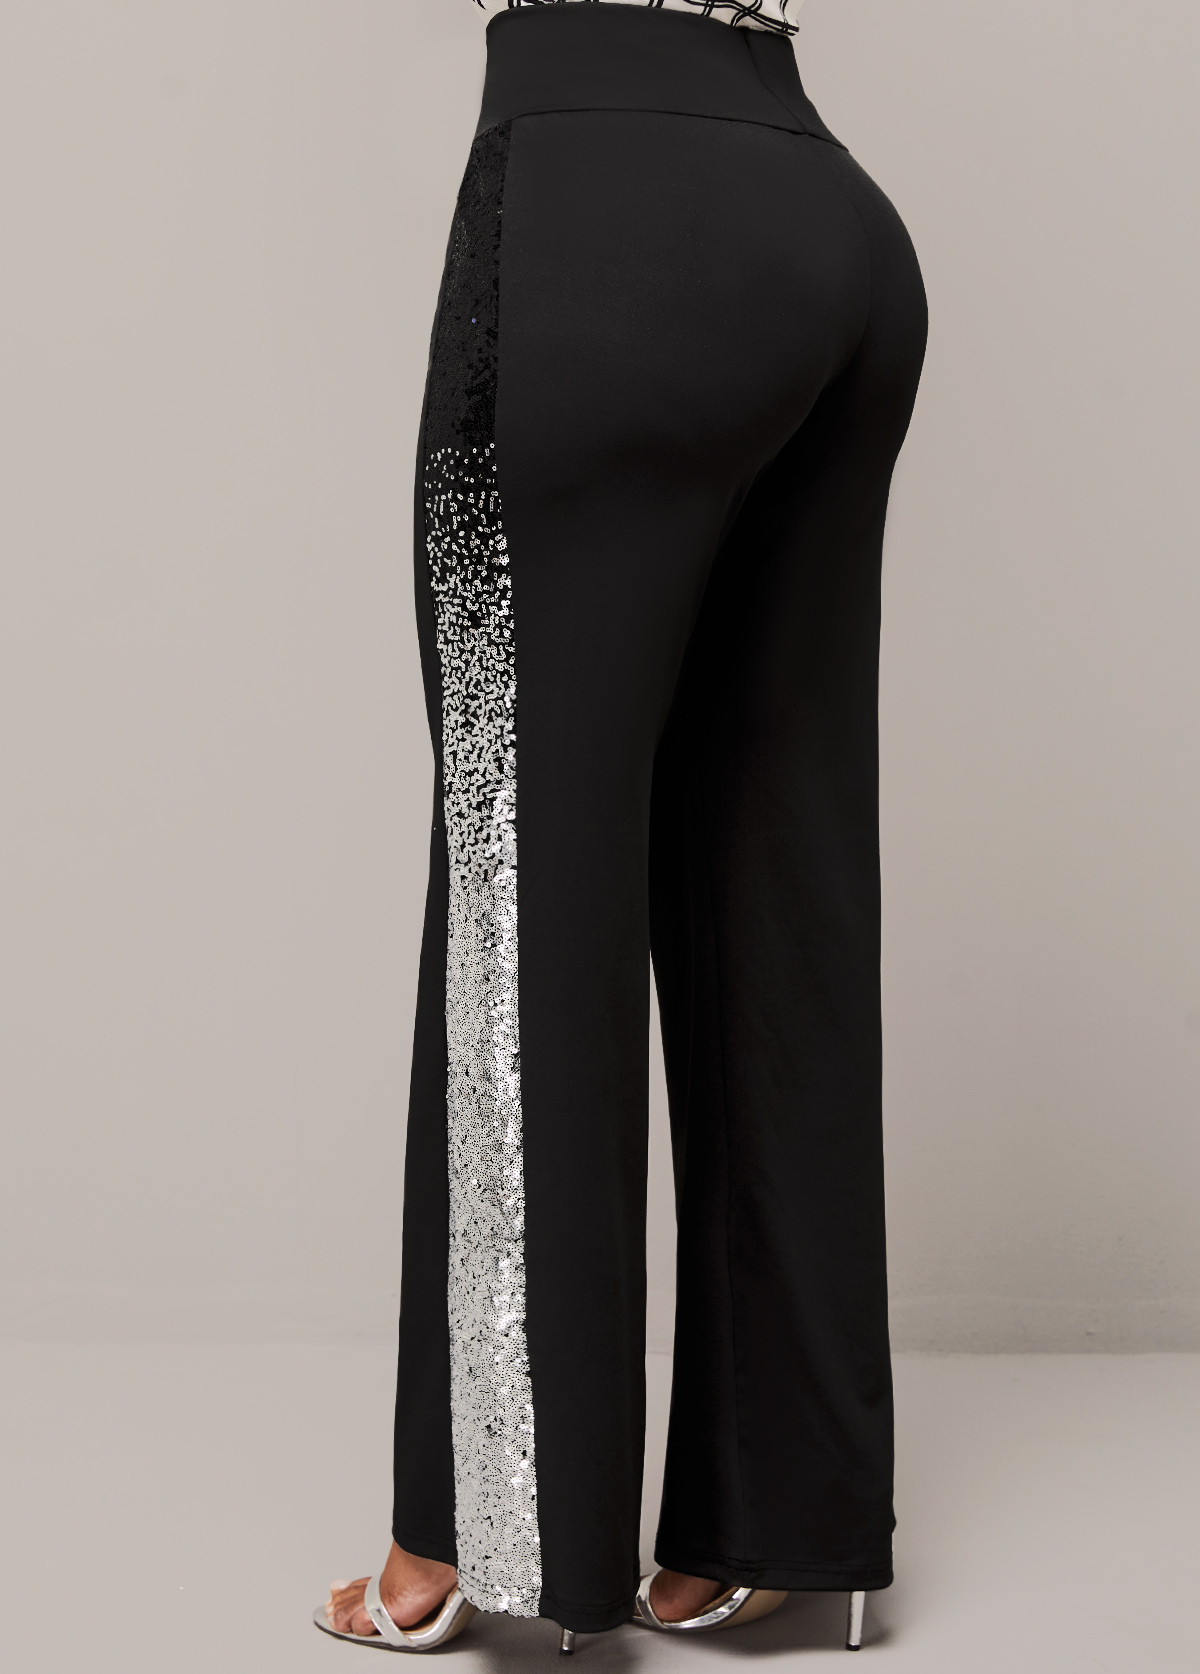 ROTITA Black Sequin Ombre High Waisted Pants | Rotita.com - USD $21.98